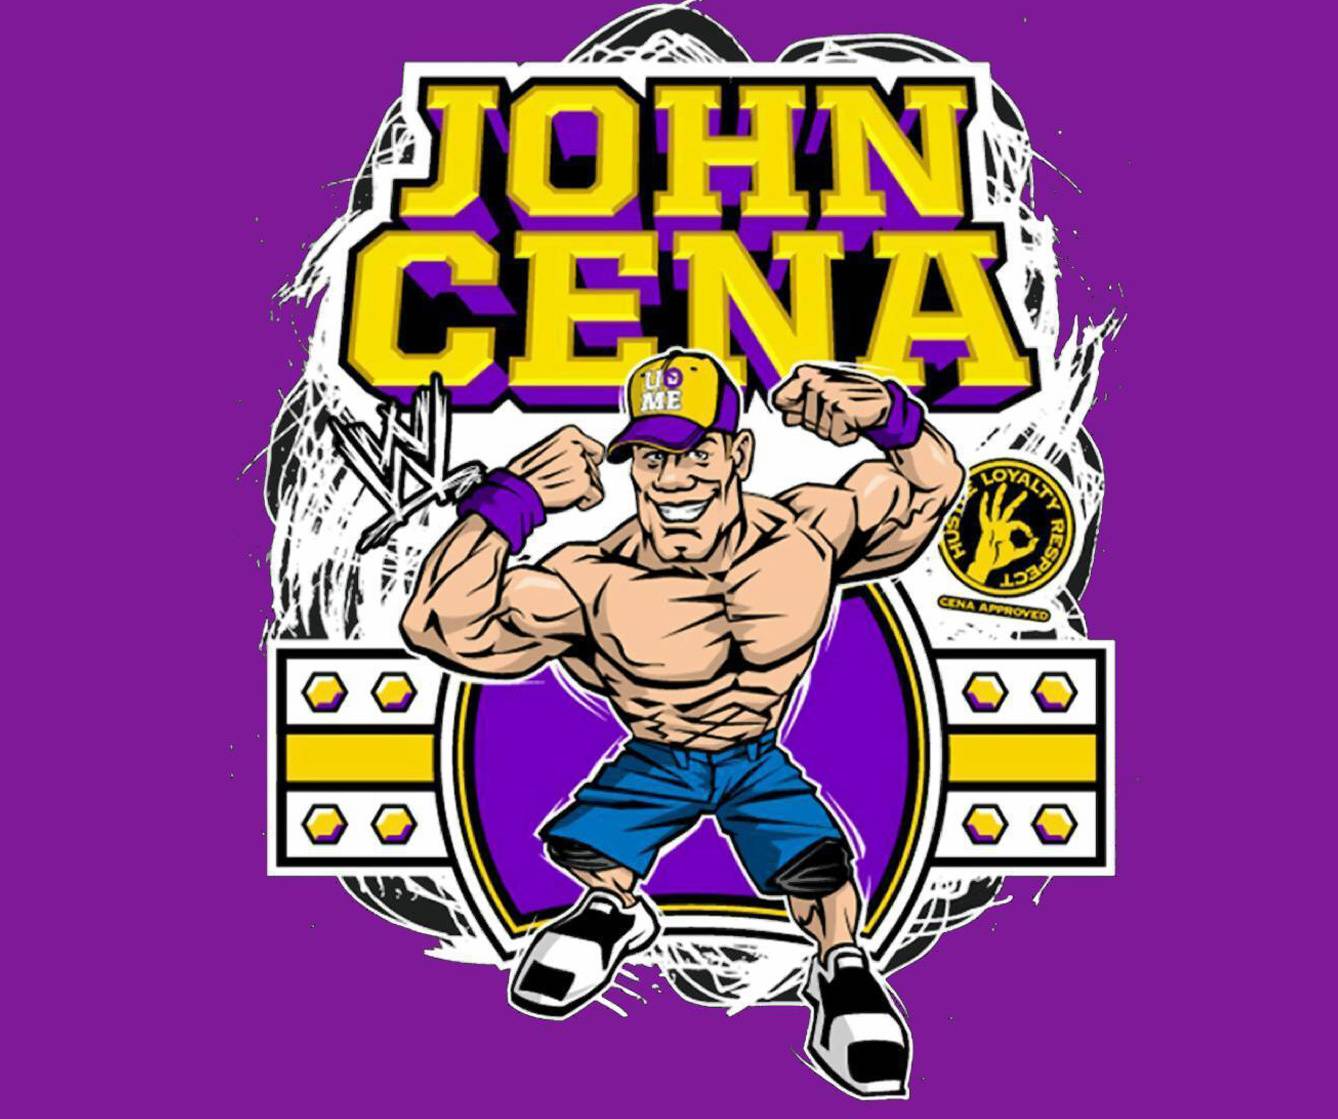 John Cena Cartoon Image